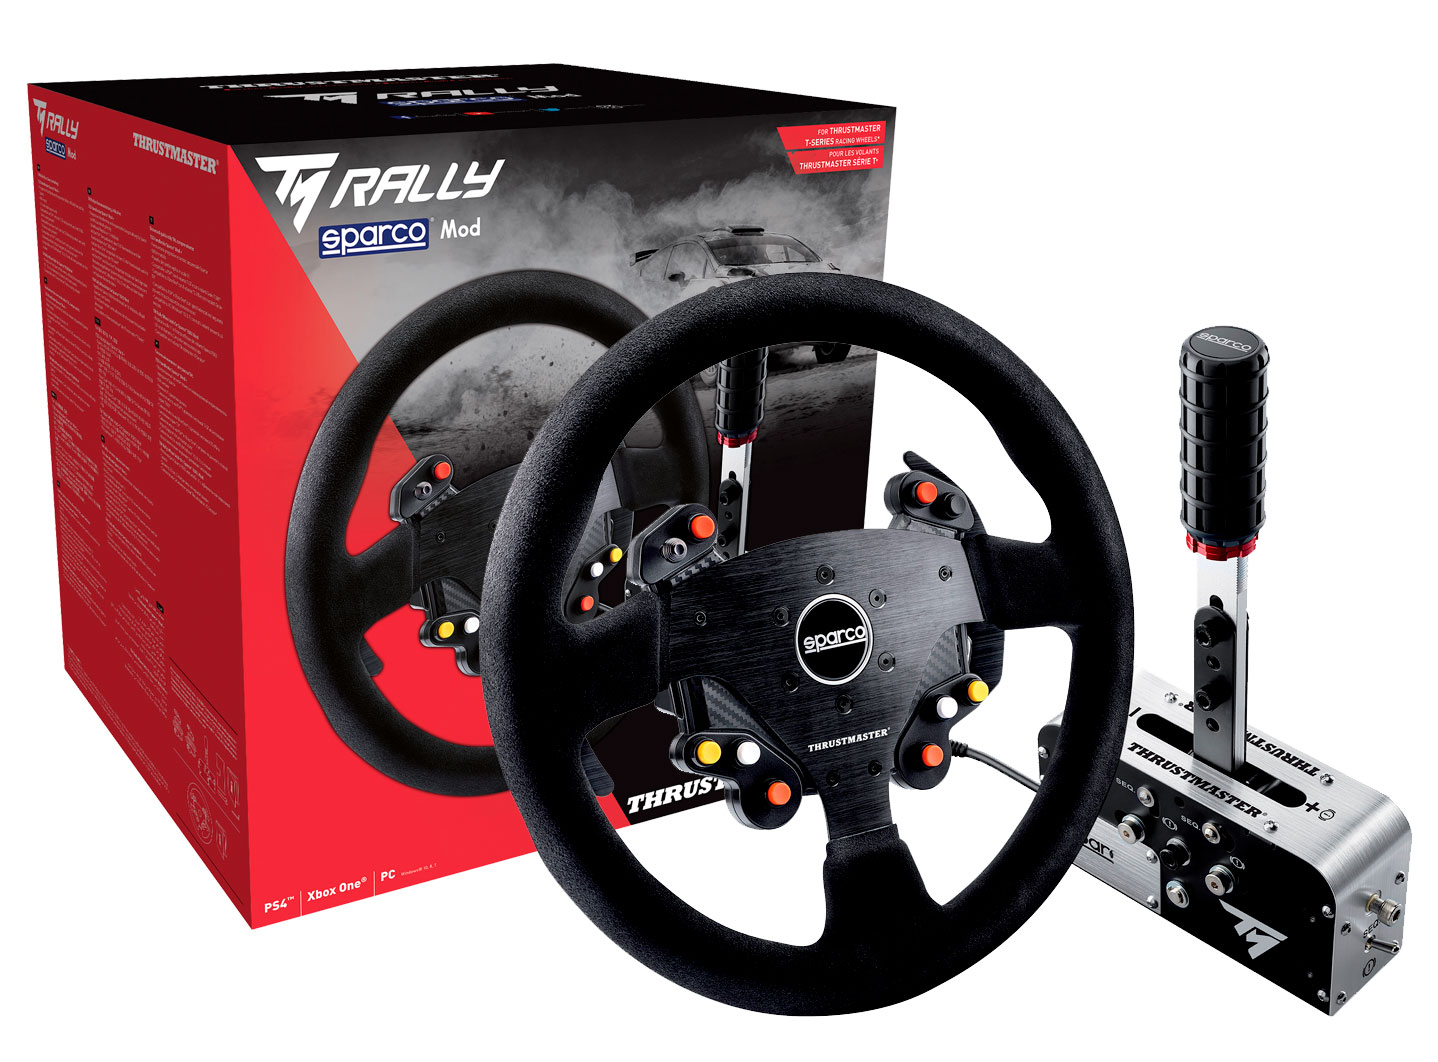 Thrustmaster TM Rally Race Gear Sparco MOD - DiscoAzul.com